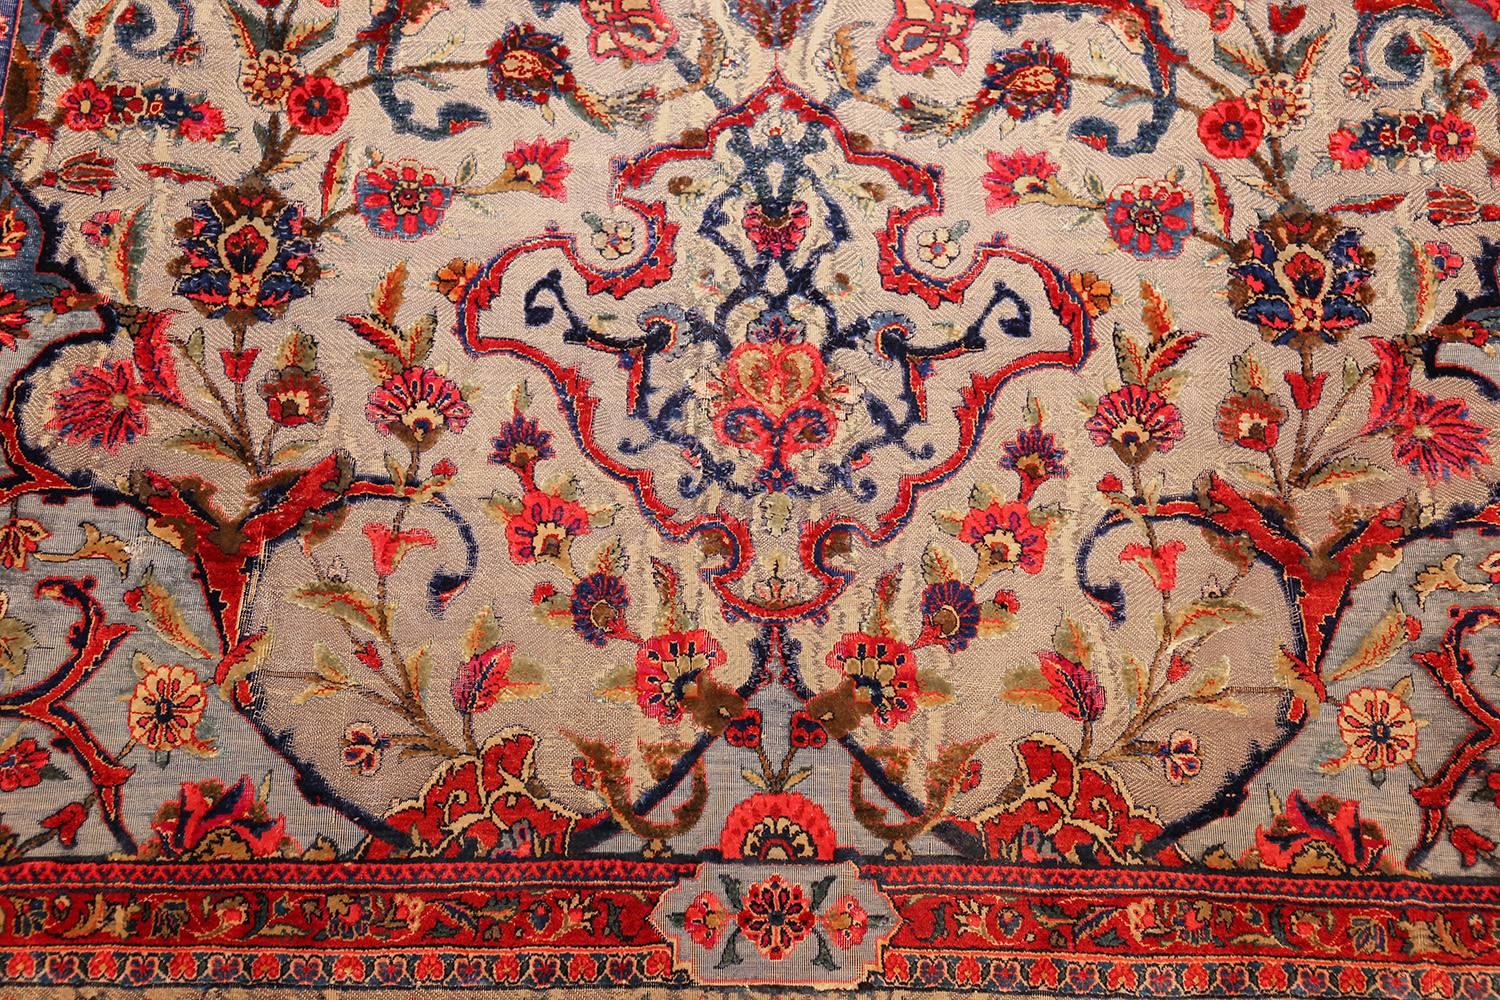 Beautiful antique metallic threading silk Souf Kashan Persian rug 49246, country of origin / rug type: Persian rug, date circa 1920. The metallic tones, in this breathtaking antique Persian Kashan rug, stand with warmer colors to create a lavish